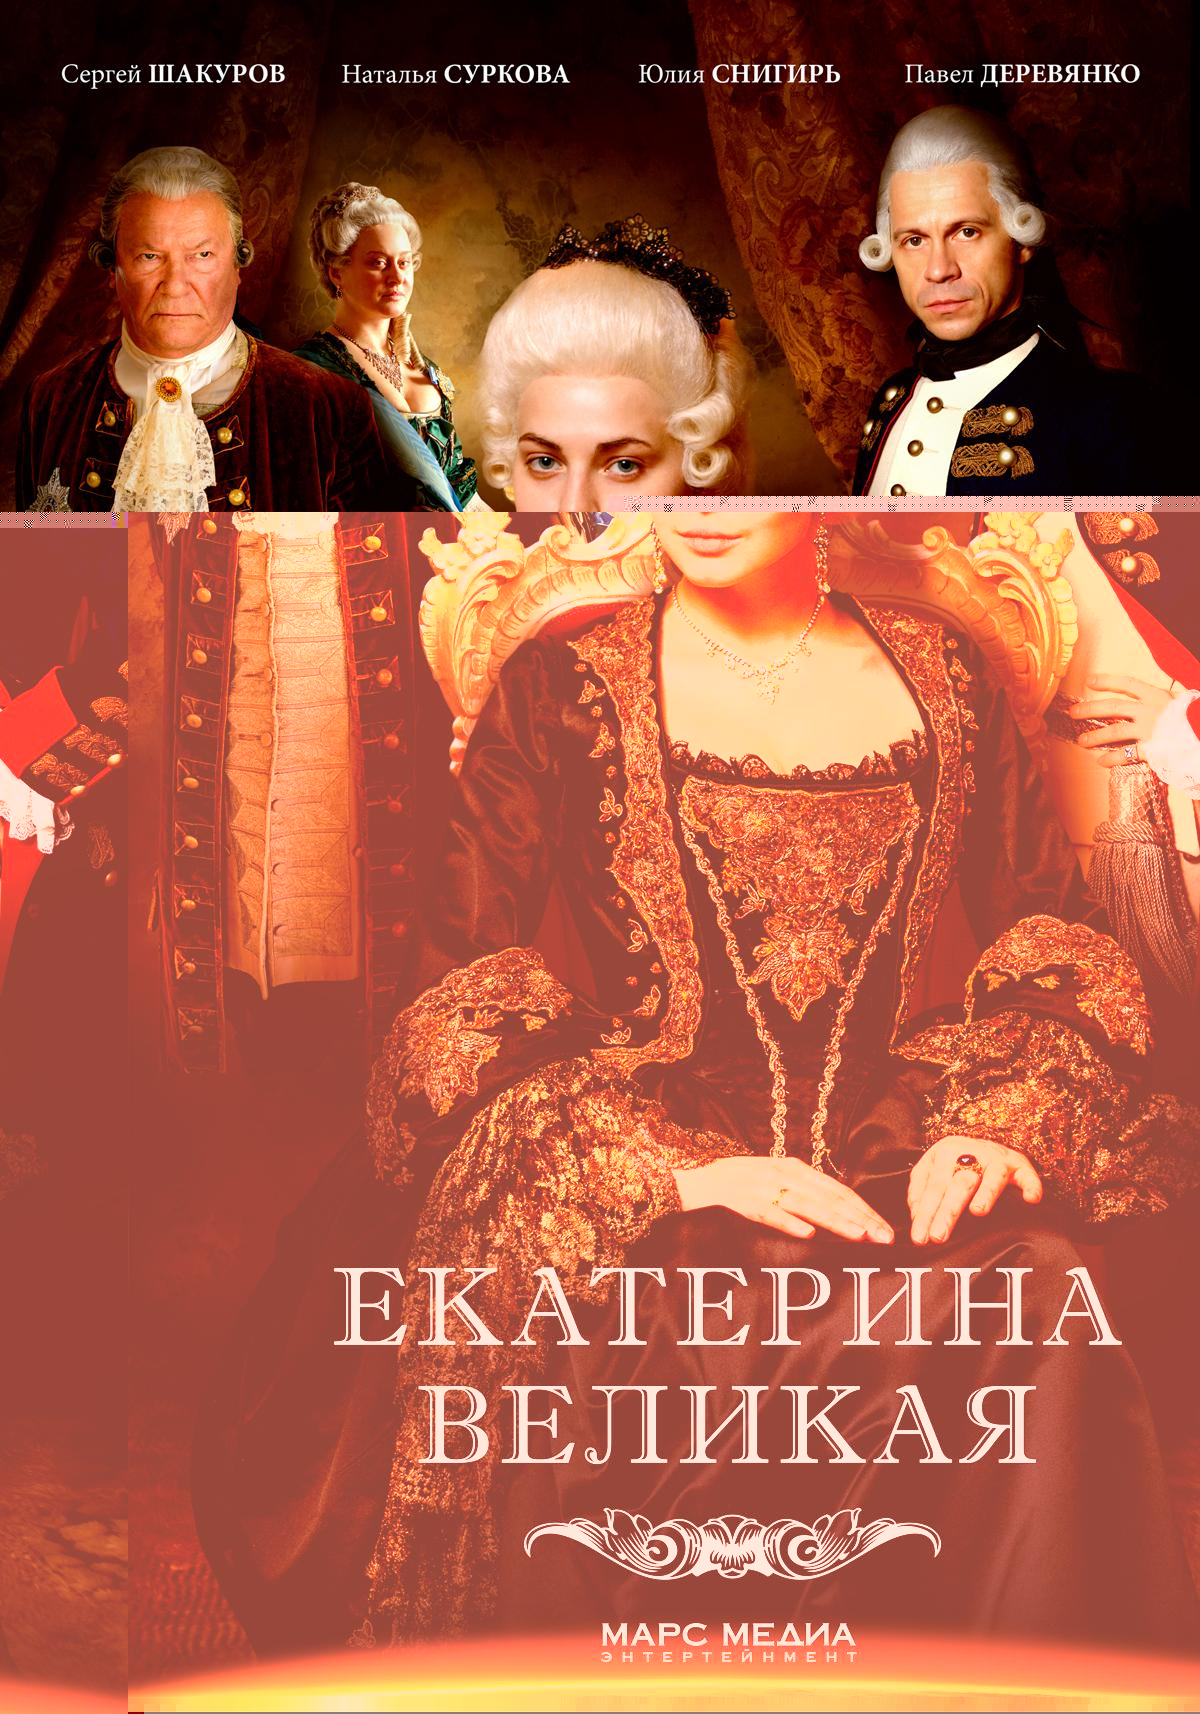 Файл:Ekaterina-Velikaya-poster.jpg